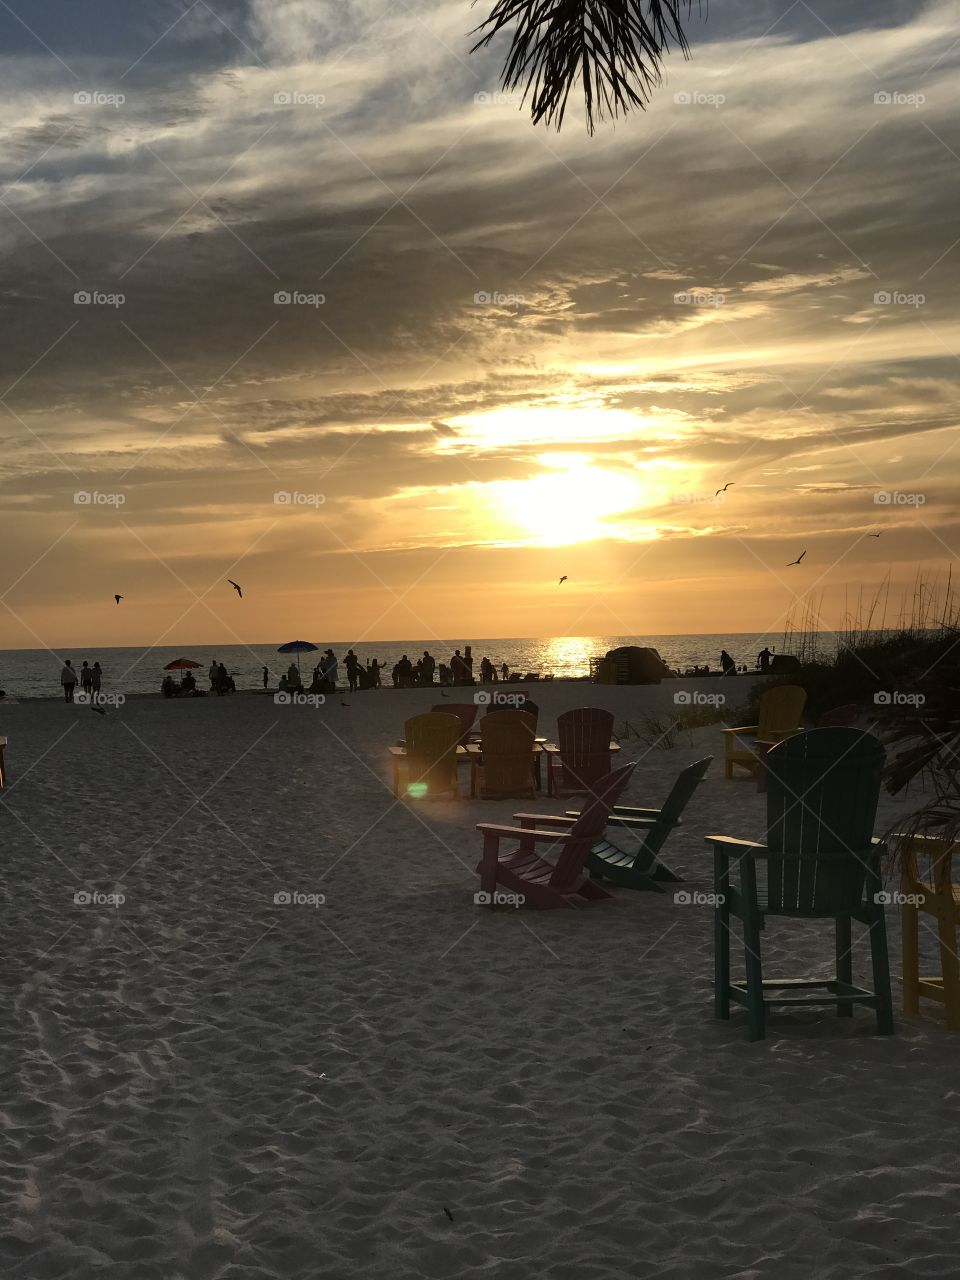 Florida's sunset on the beach 